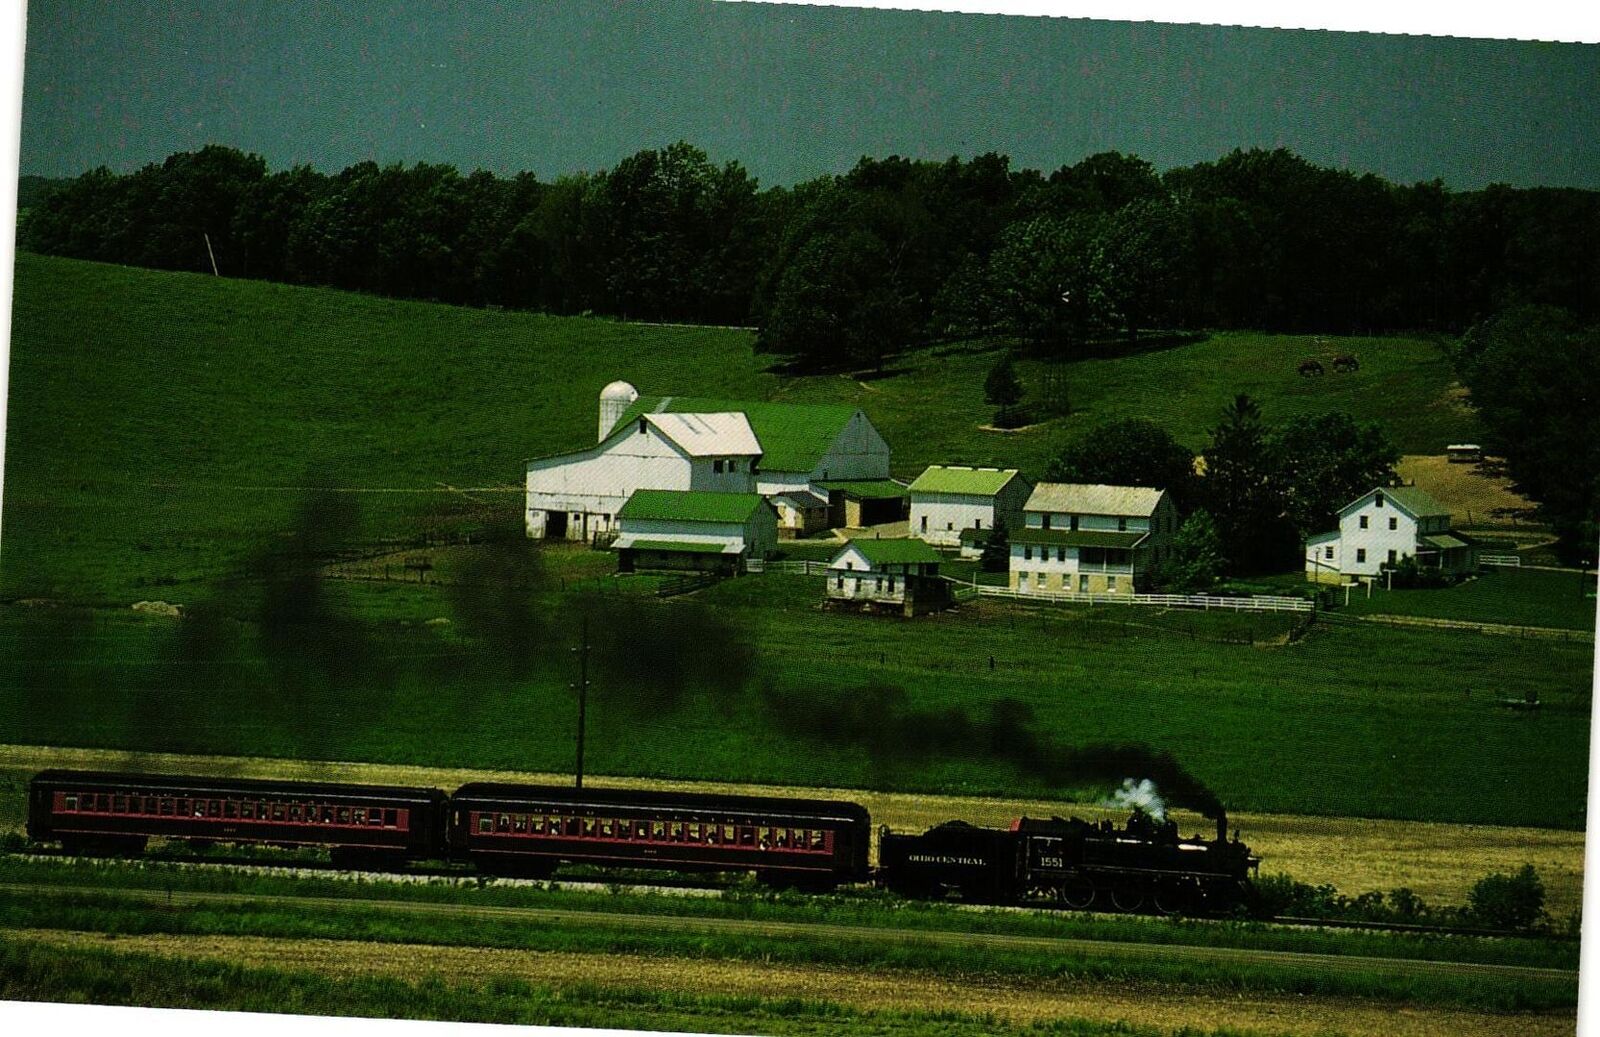 Vintage Postcard 4x6- Ex-Canadian National locomotive 1551, Amish countryside, H